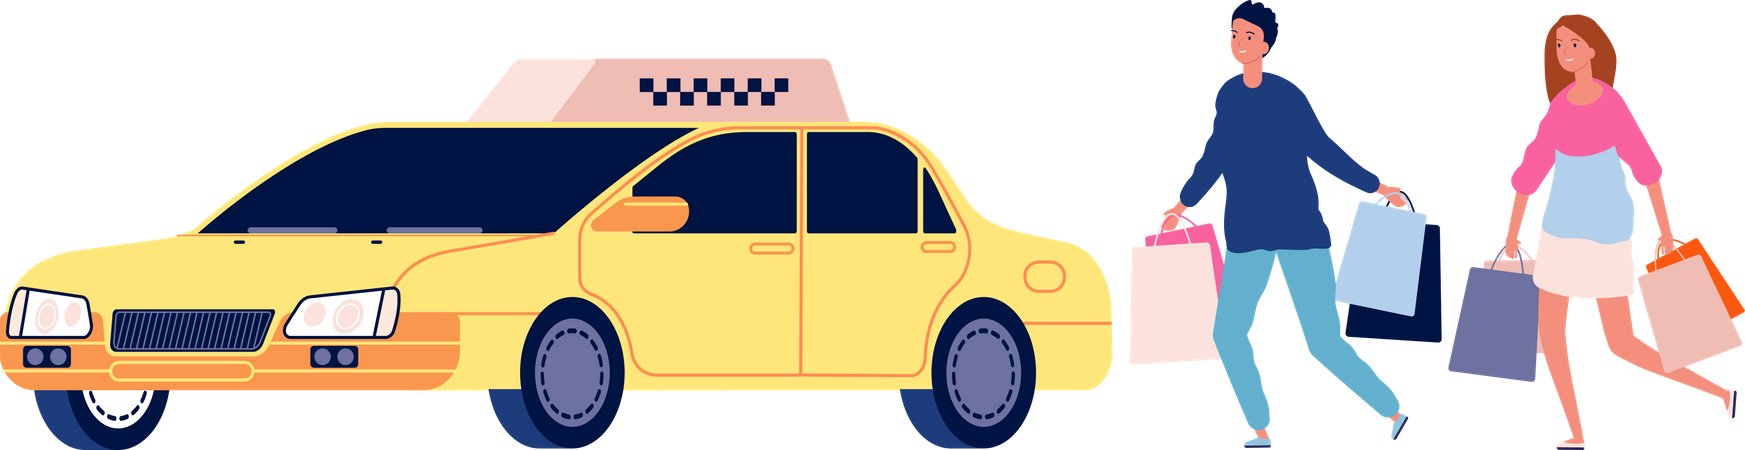 Couple calling cab service Illustration